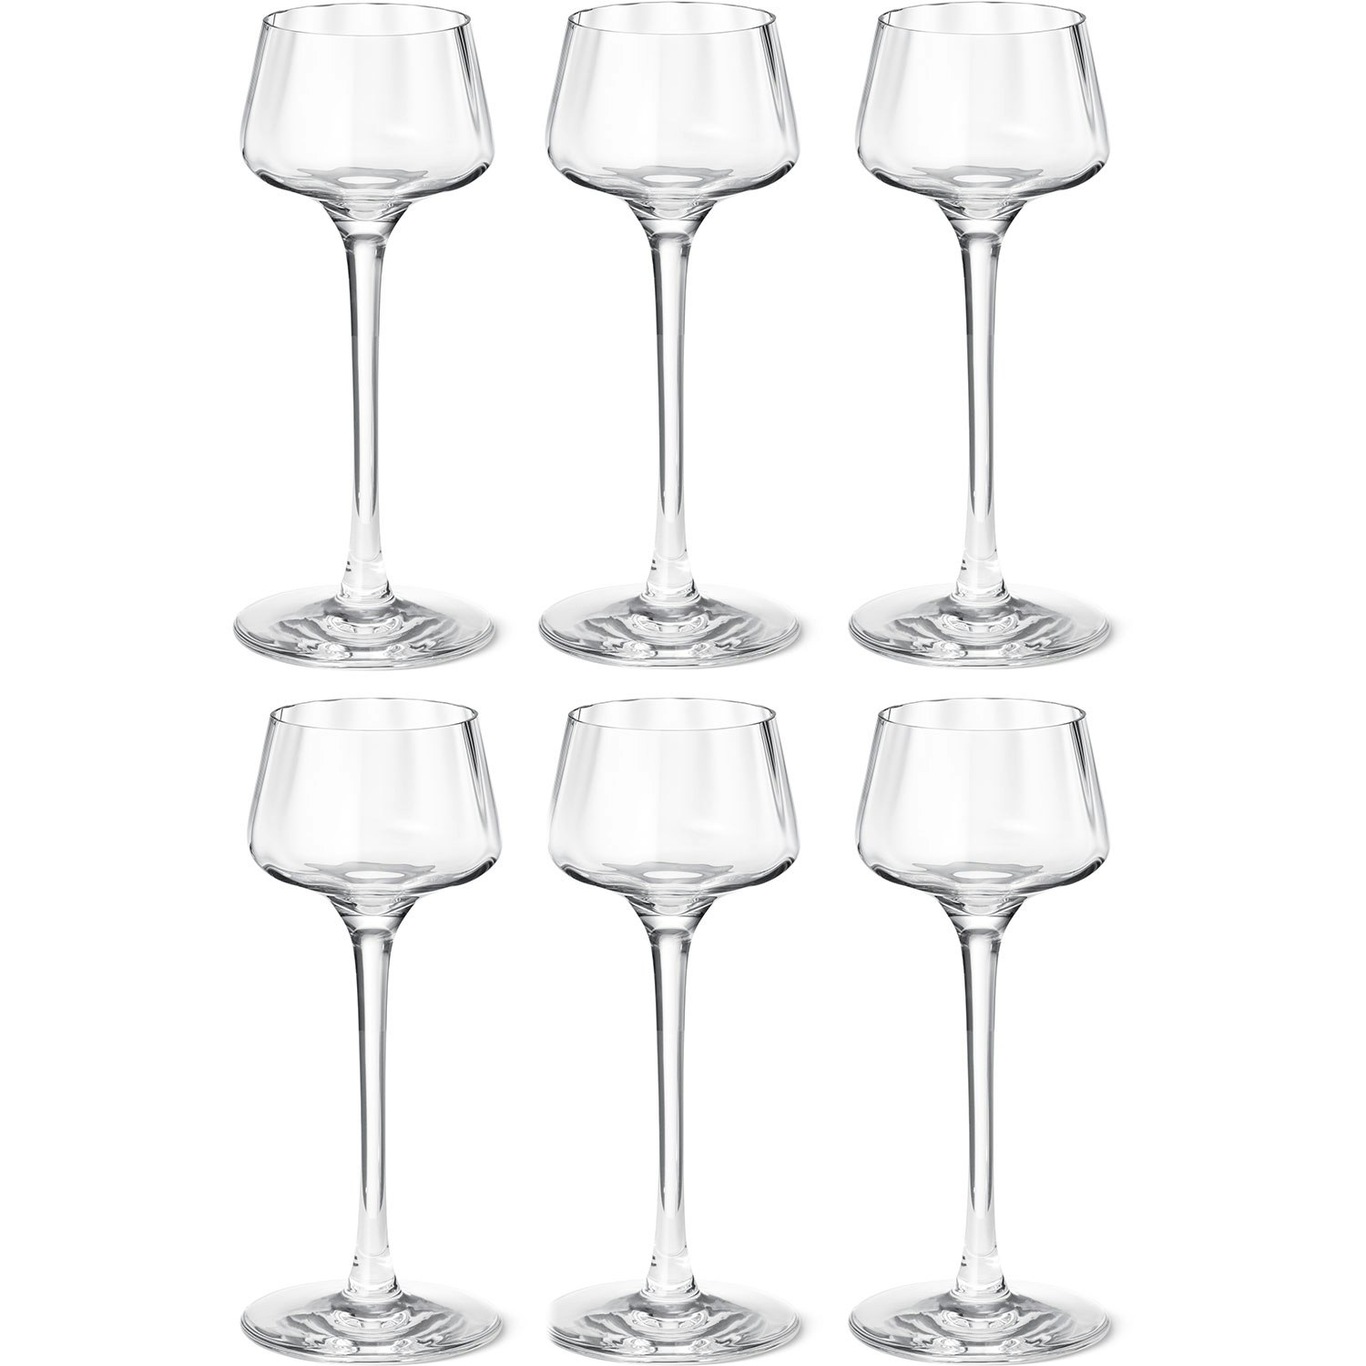 https://royaldesign.com/image/2/georg-jensen-bernadotte-snaps-liquor-glass-xln-4-cl-6-pcs-0?w=800&quality=80